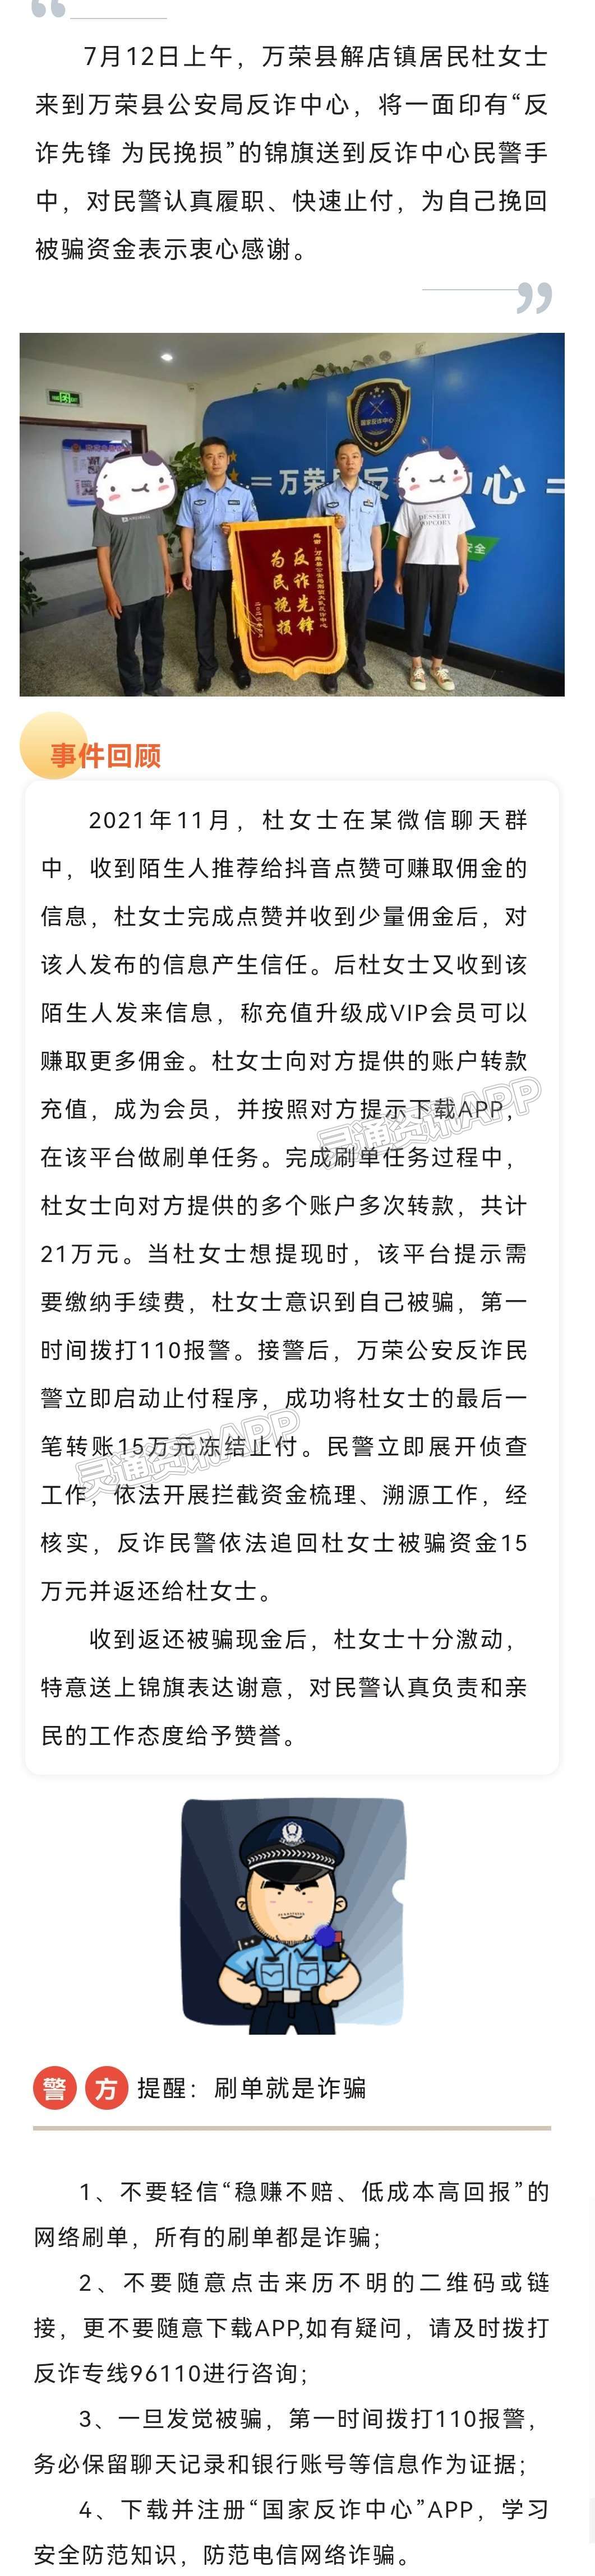 ‘Ayx官方网站’万荣公安快速止付，为群众挽回损失15万元(图1)